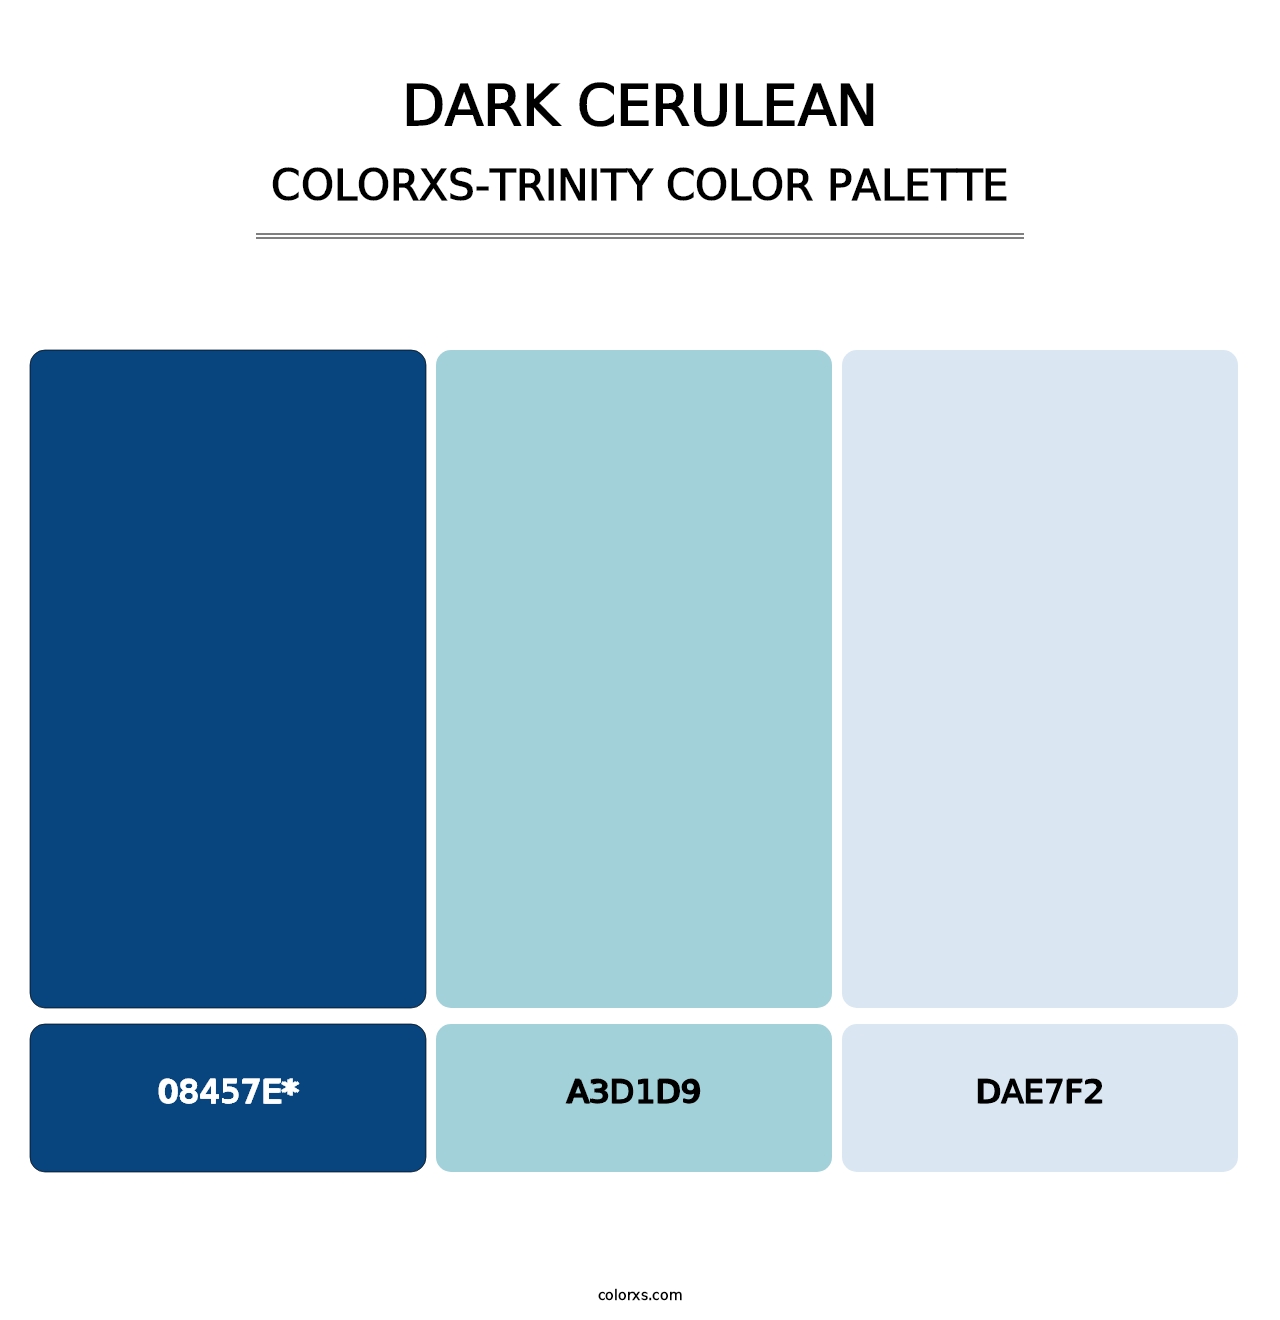 Dark Cerulean - Colorxs Trinity Palette